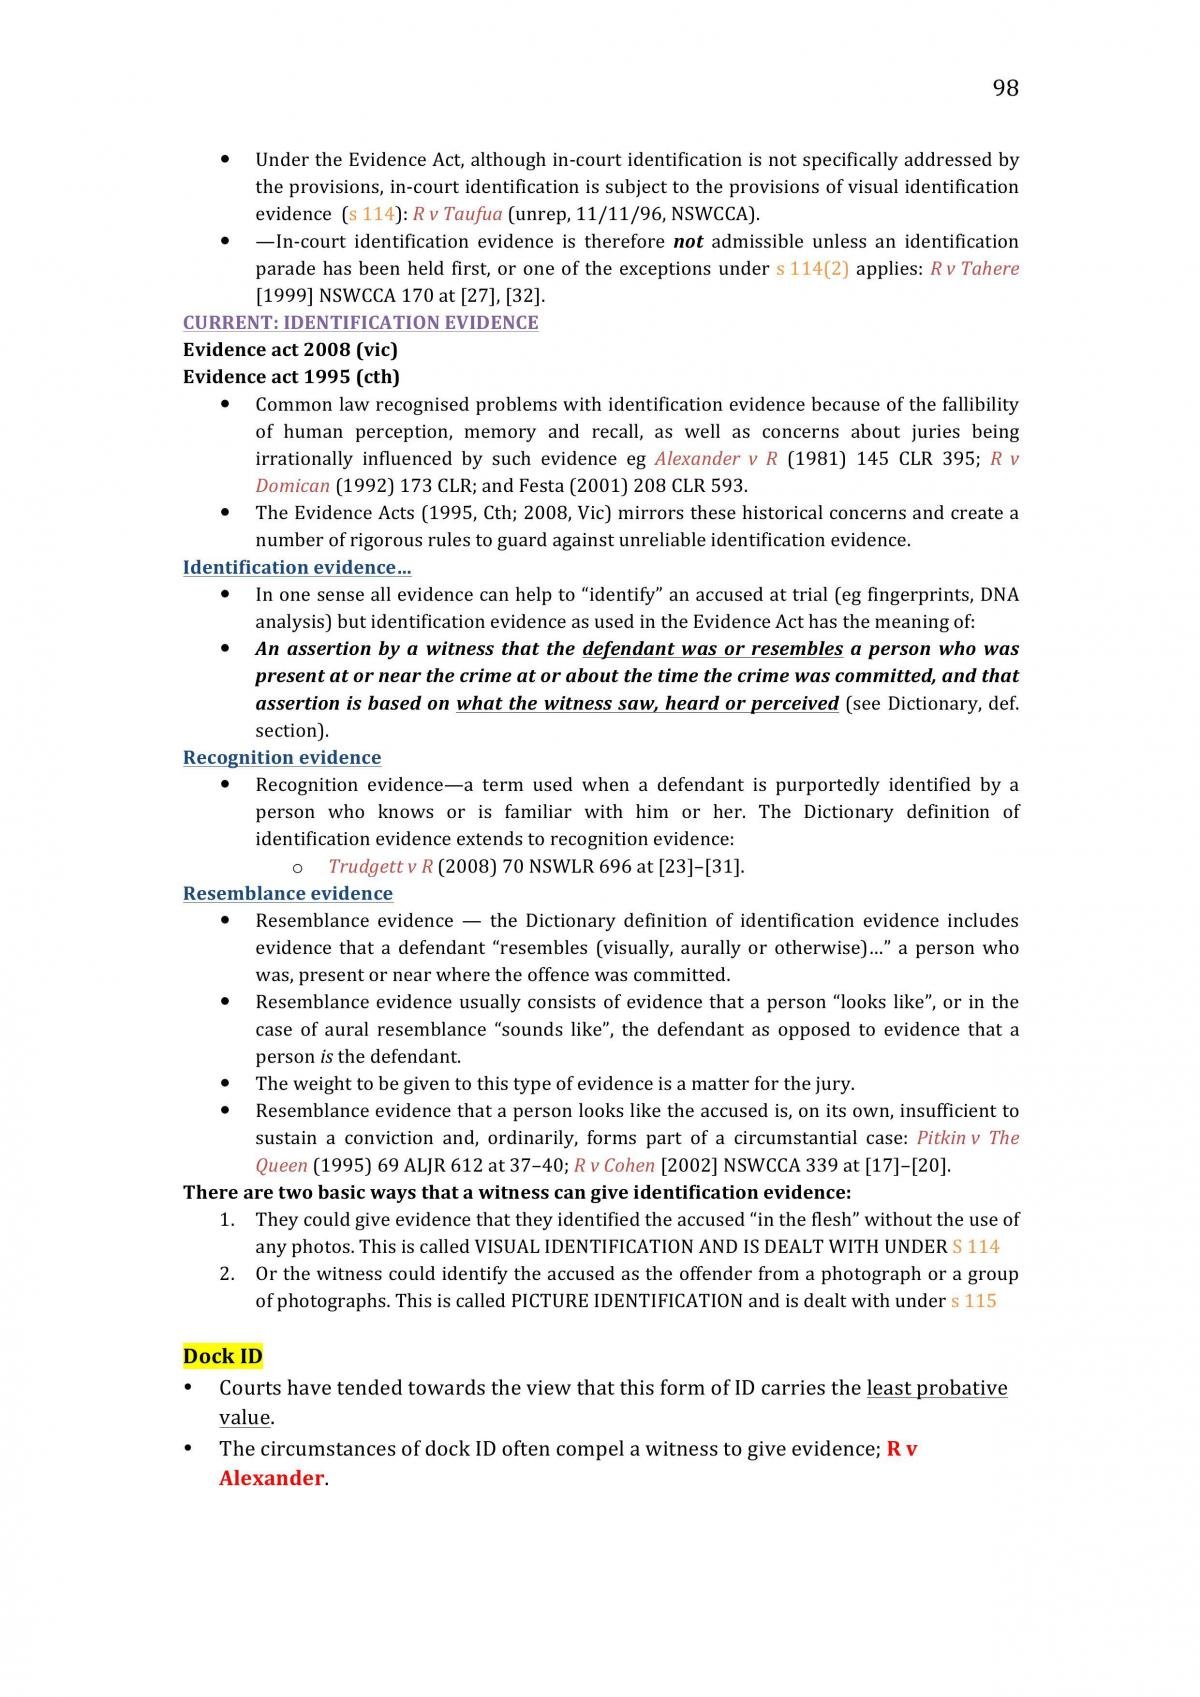 Criminal Procedure HD Notes - Page 98